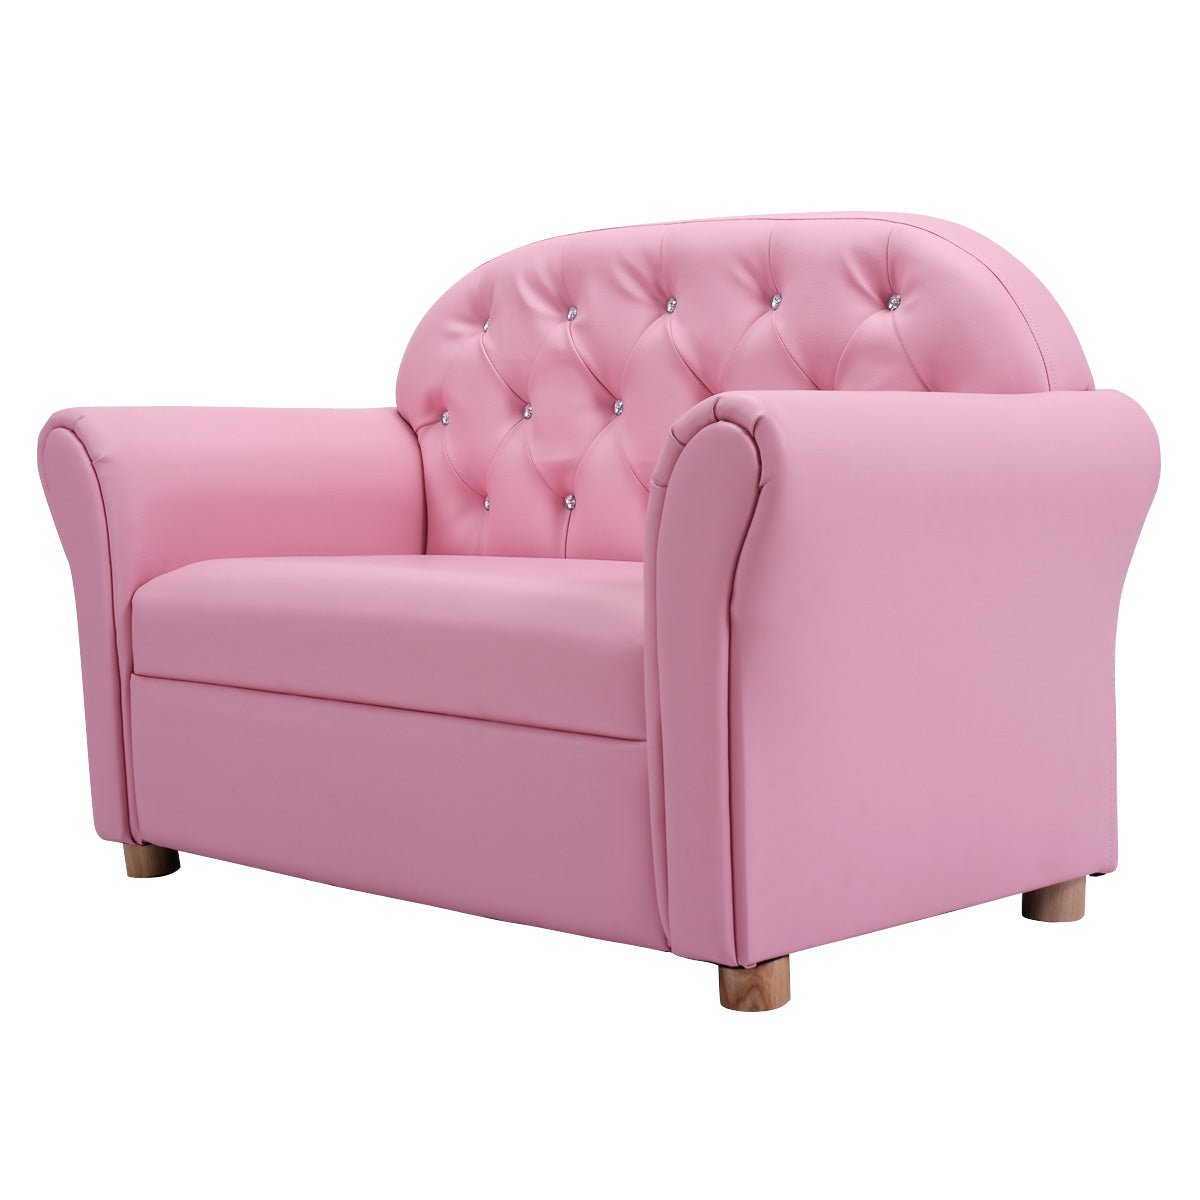 Children's Armrest Sofa Chair: PVC Leather, Plush Seating for Kids